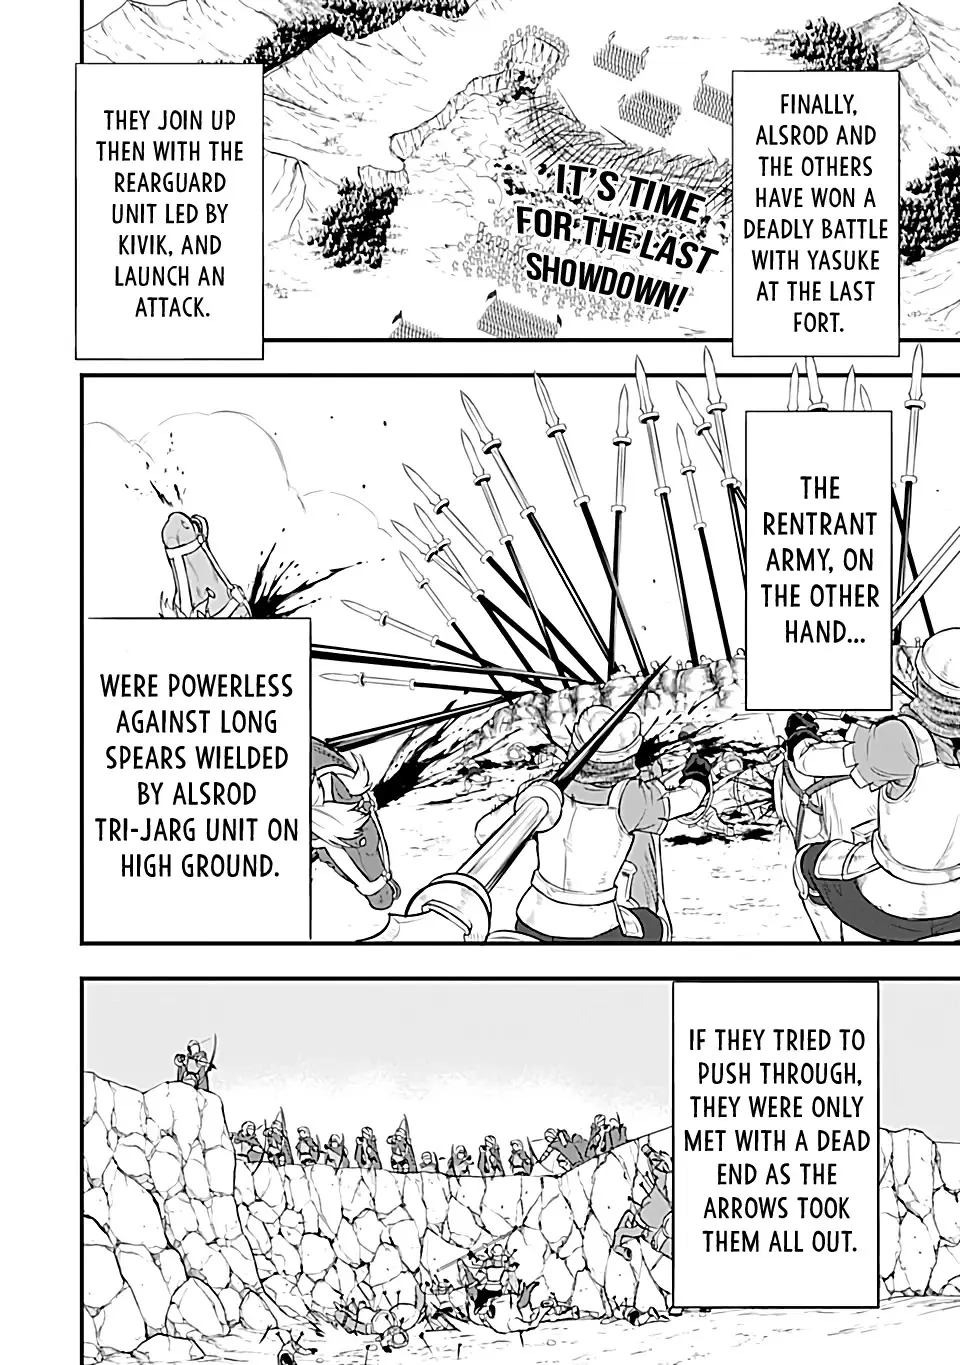 Mysterious Job Called Oda Nobunaga - 16 page 3-06edfd83